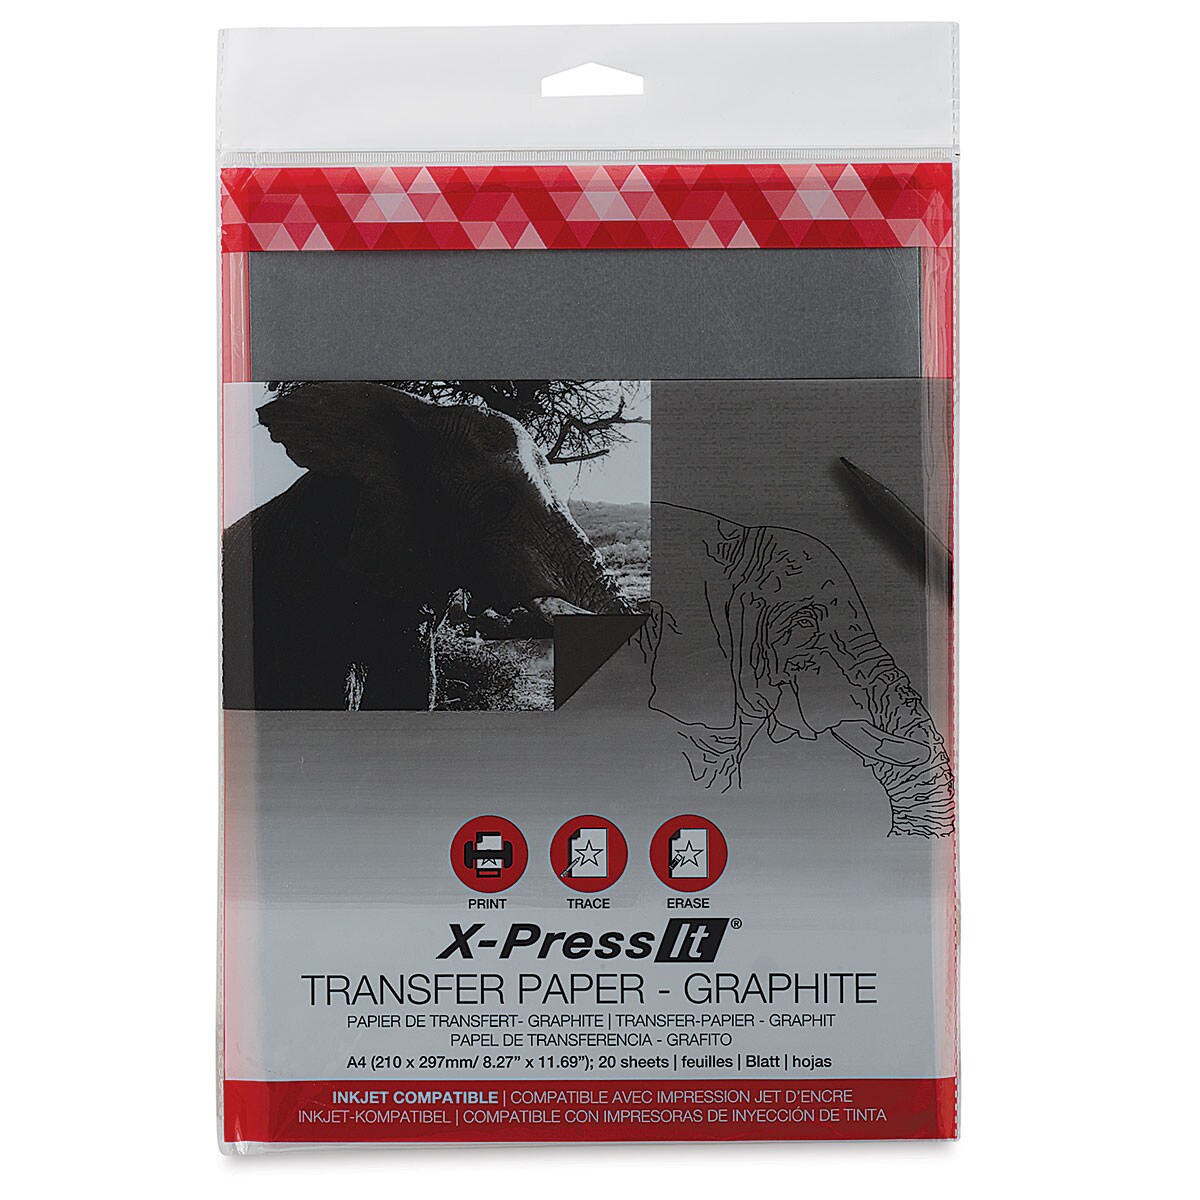 X-Press It Transfer Paper - Graphite, 20 Sheets